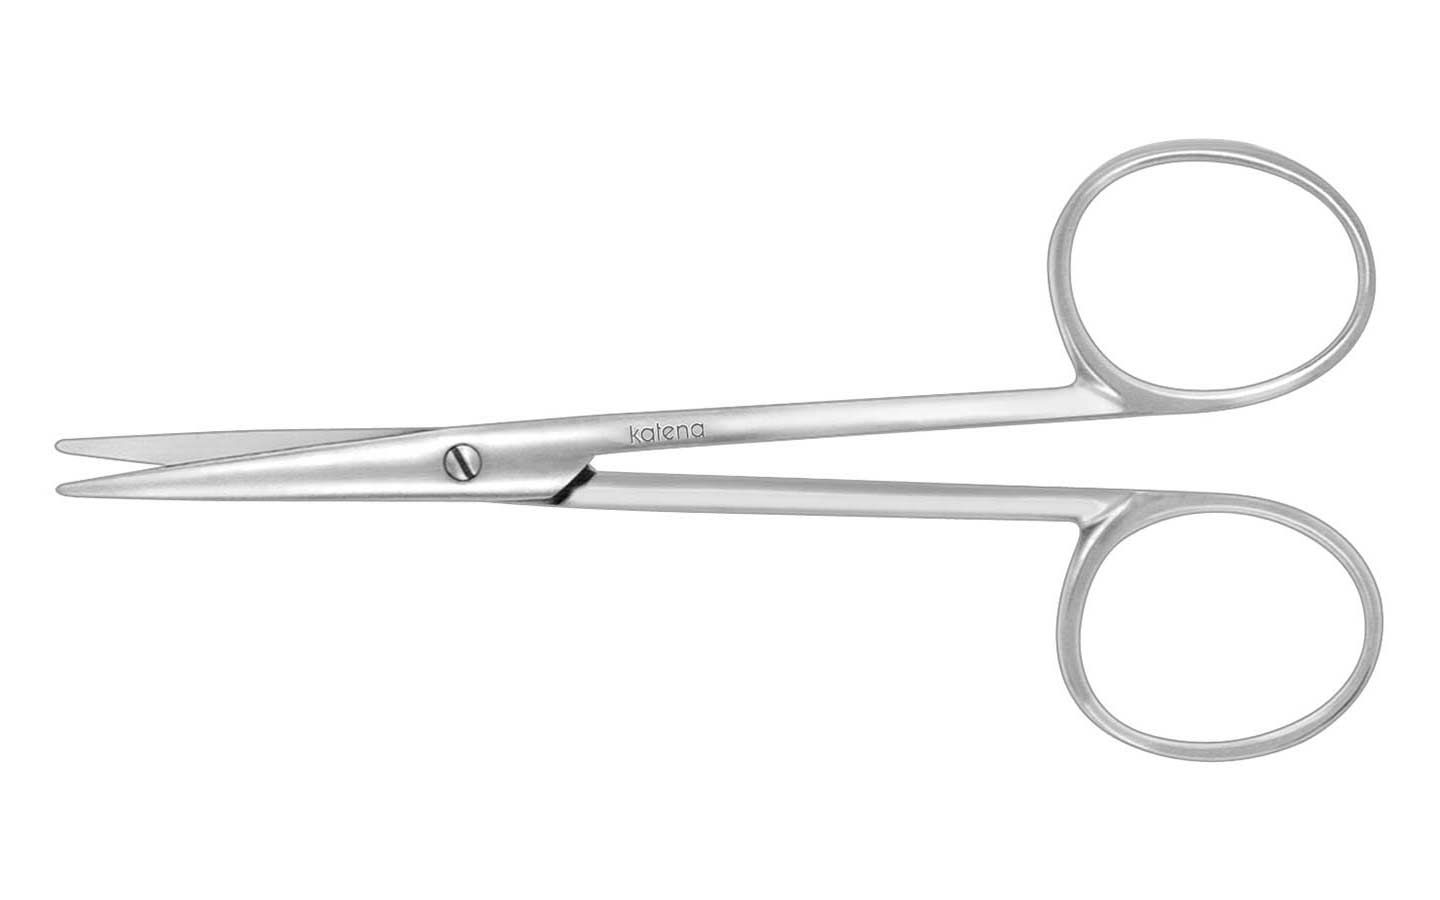 Knapp Strabismus Scissors, Standard, Blunt Tips, Rounded Blades, 4 1/2" (11.5 Cm), Curved